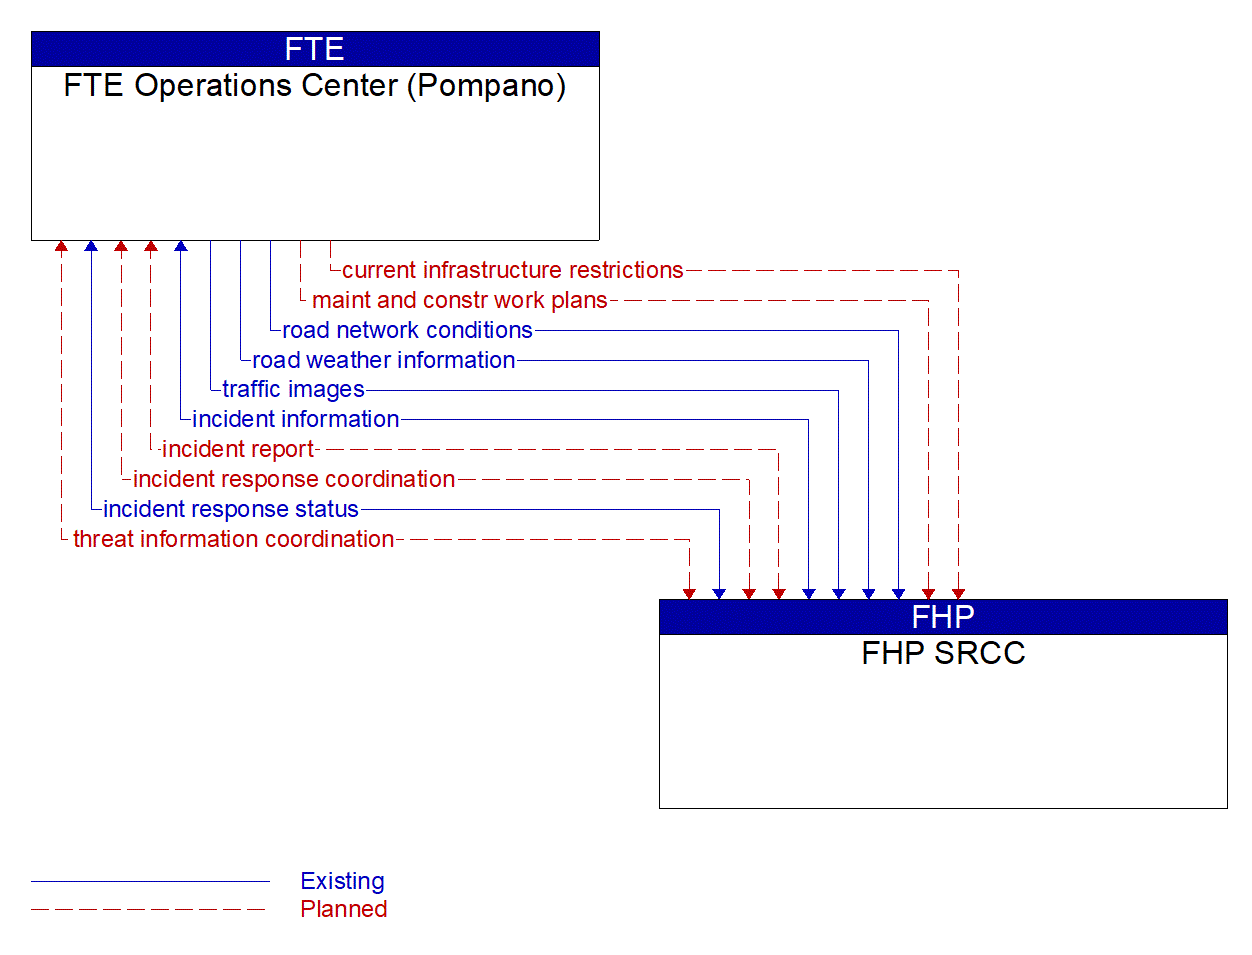 Architecture Flow Diagram: FHP SRCC <--> FTE Operations Center (Pompano)